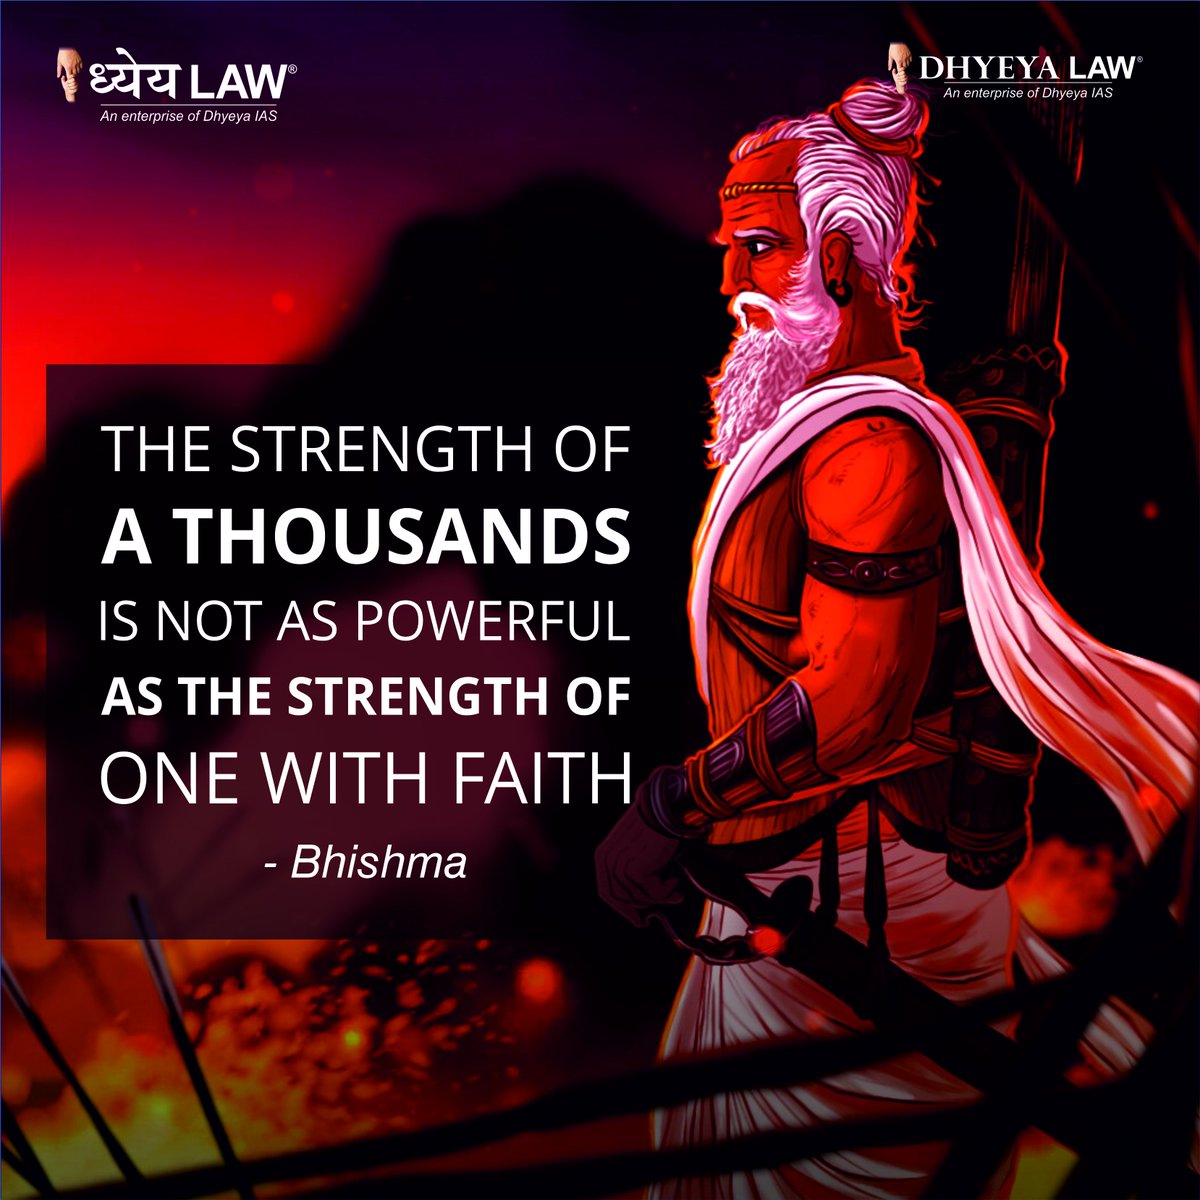 Motivation for the day!🥇🎯

#dailymotivation #success #judiciary #legal #law #dhyeyalaw #success #motivationdaily

#Bhishma #strength #faith